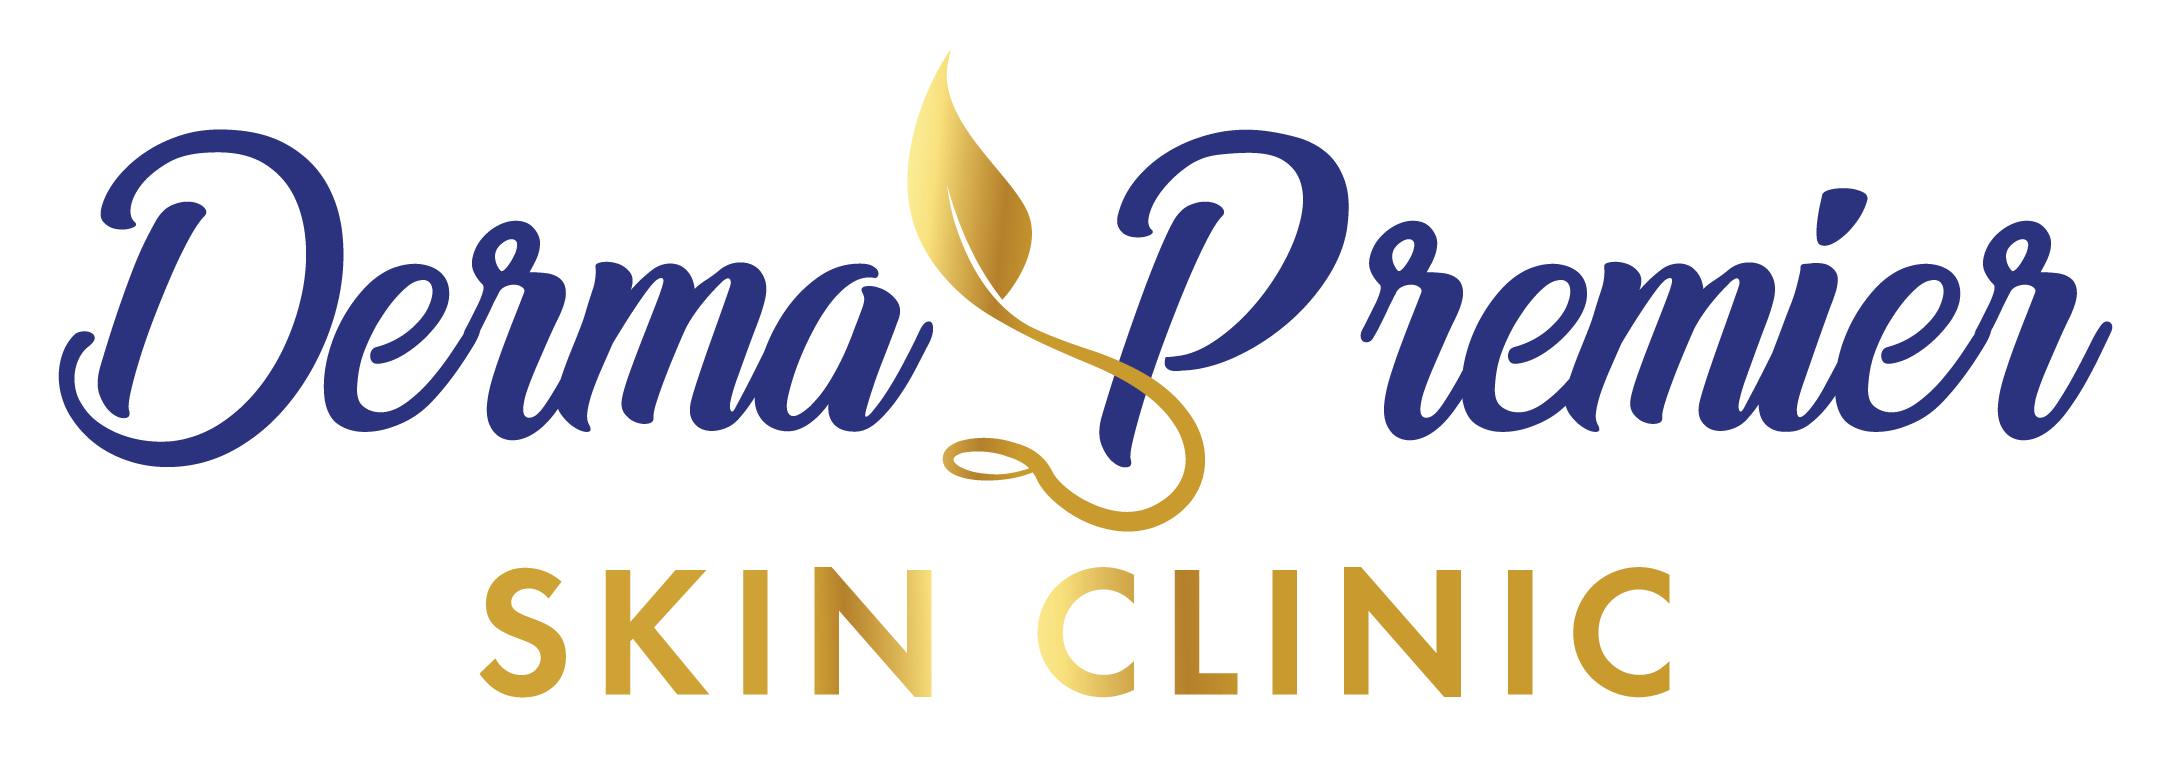 Derma Premier Skin Clinic